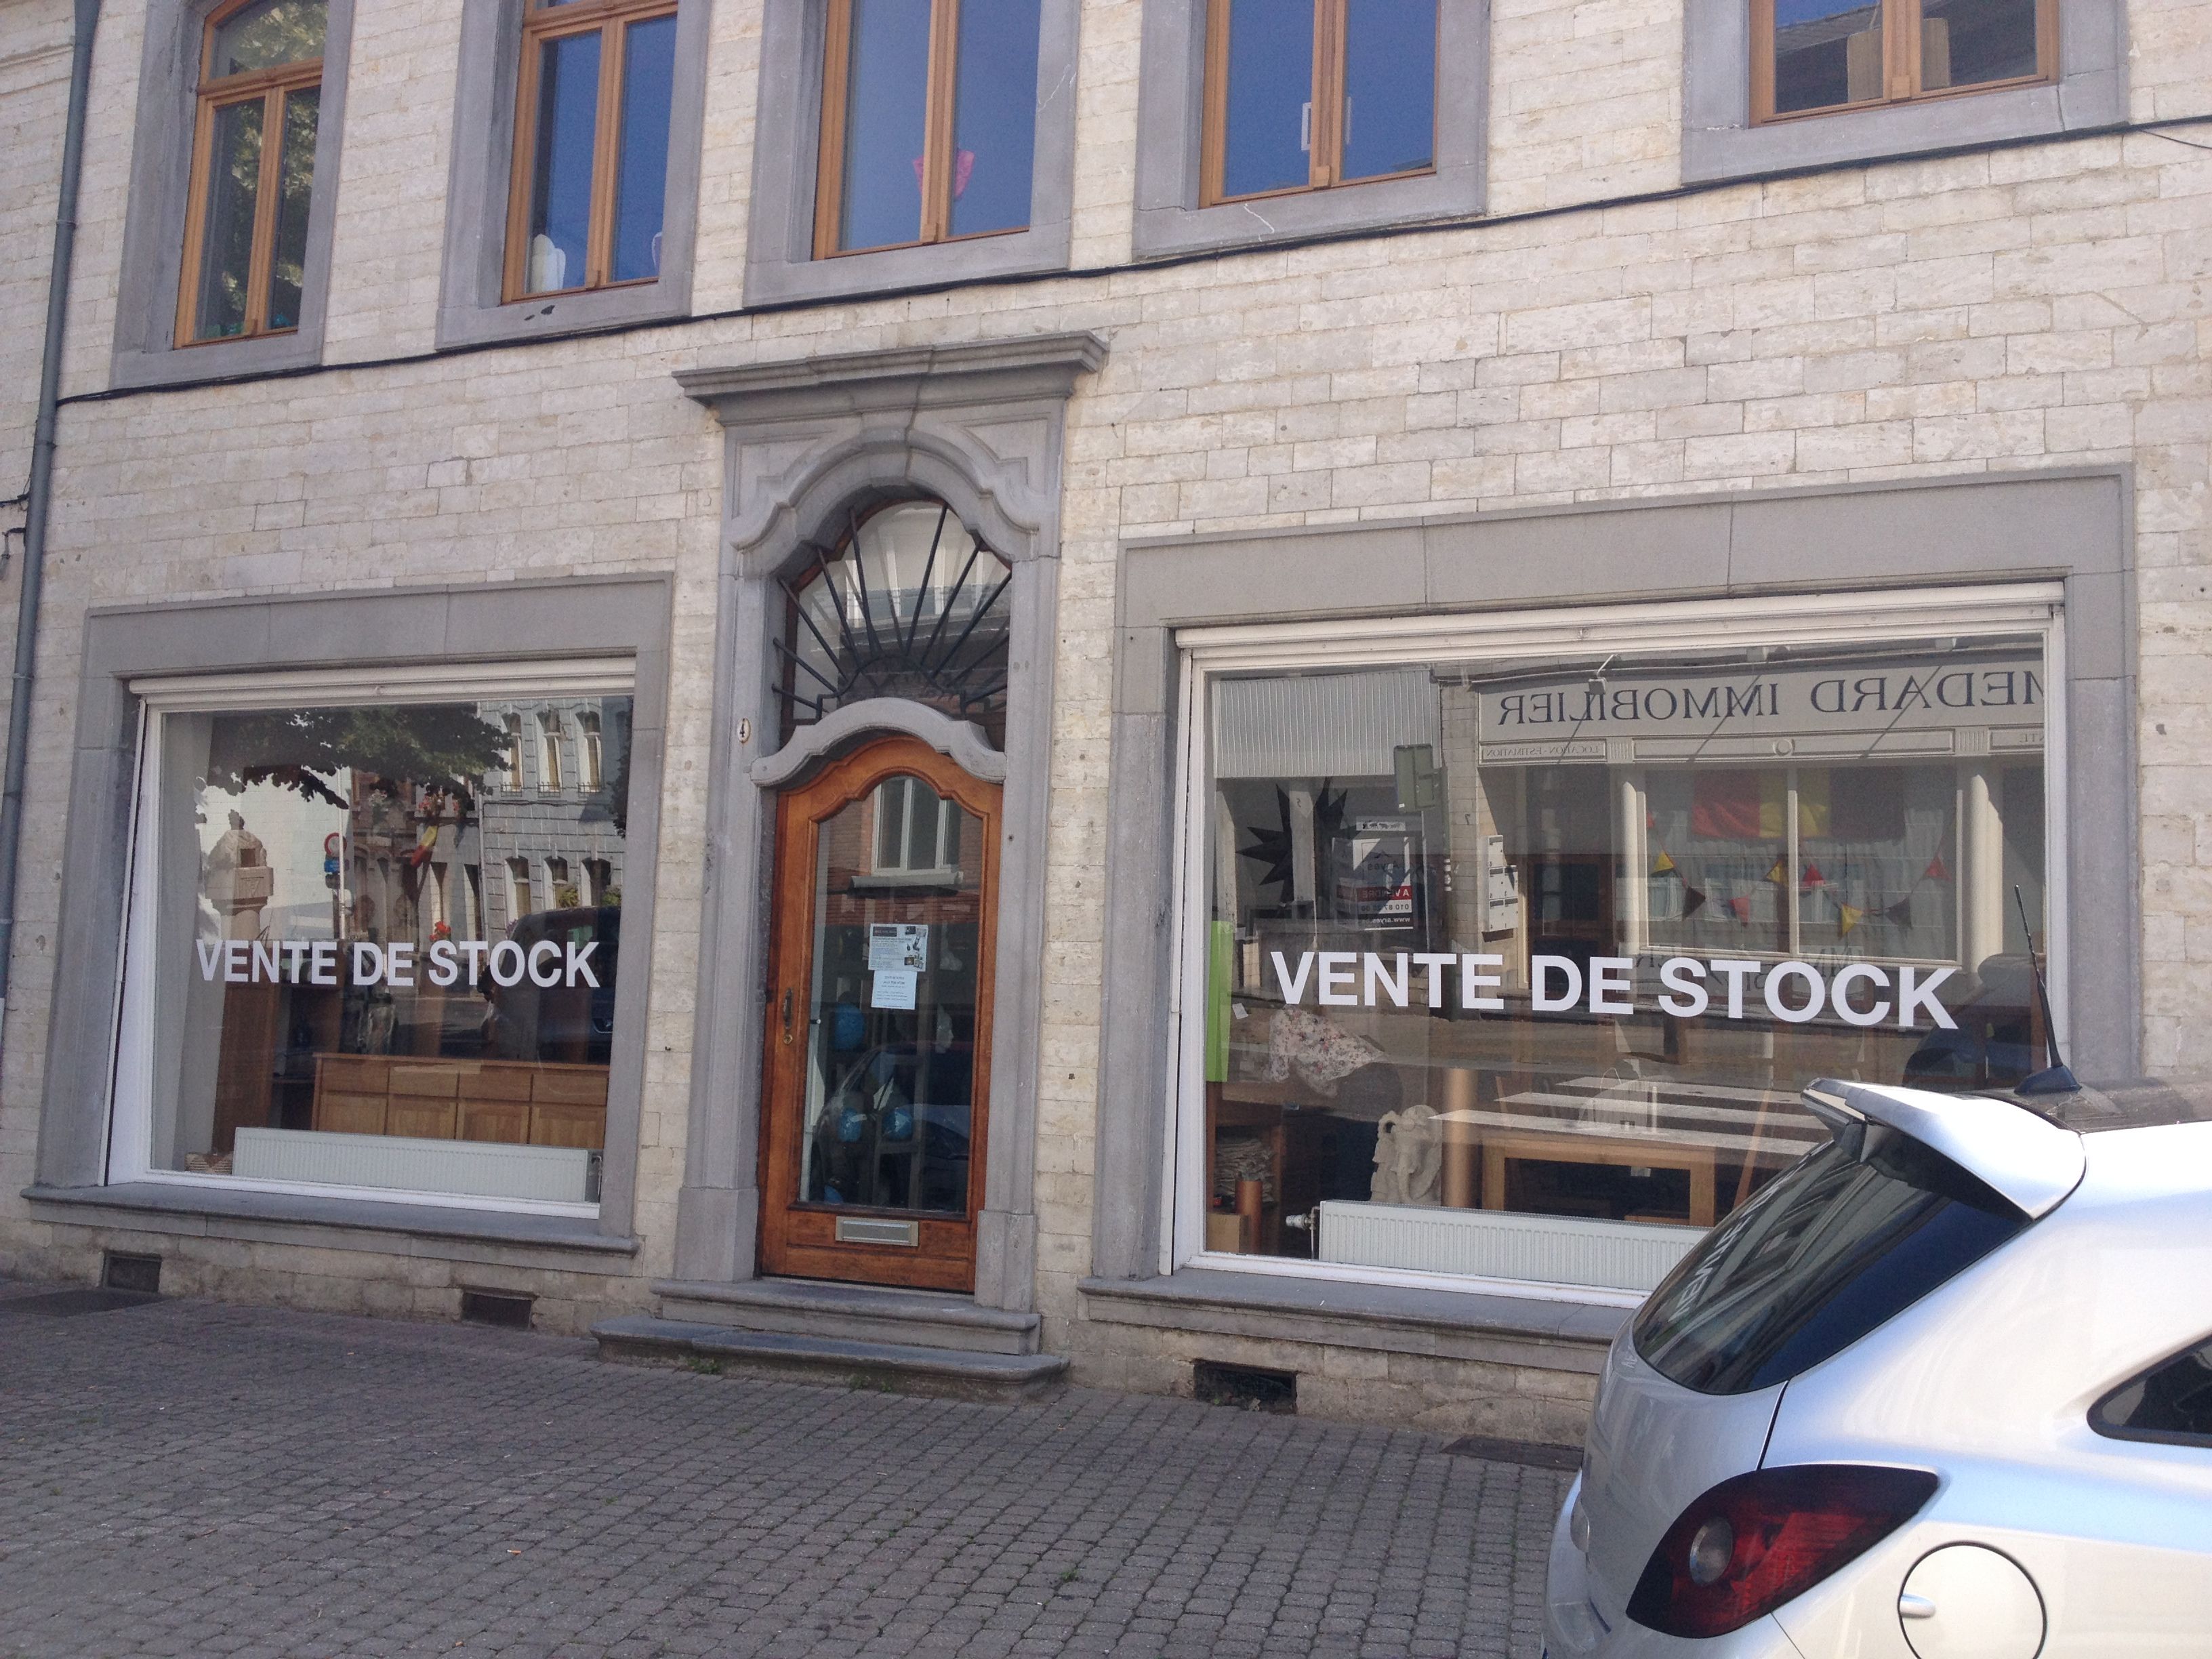 Commerciële ruimte te huur Rue Saint Médard 4 - 1370 Jodoigne